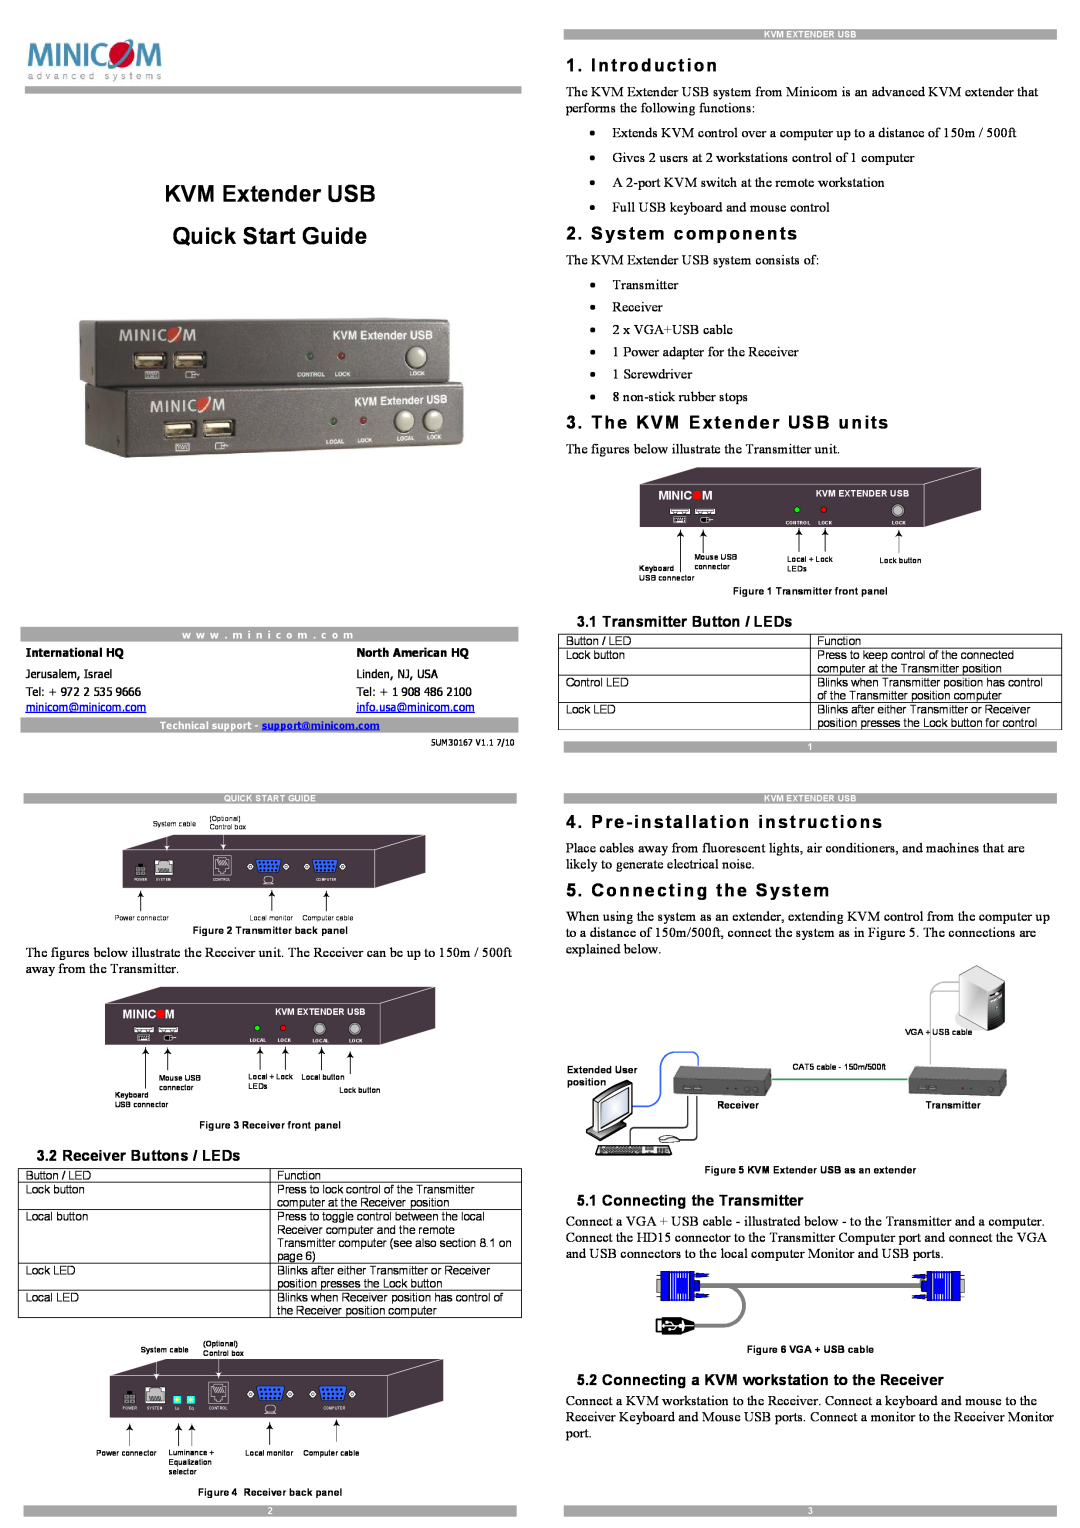 Minicom Advanced Systems 5UM30167 installation instructions Introduction, System components, The KVM Extender USB units 